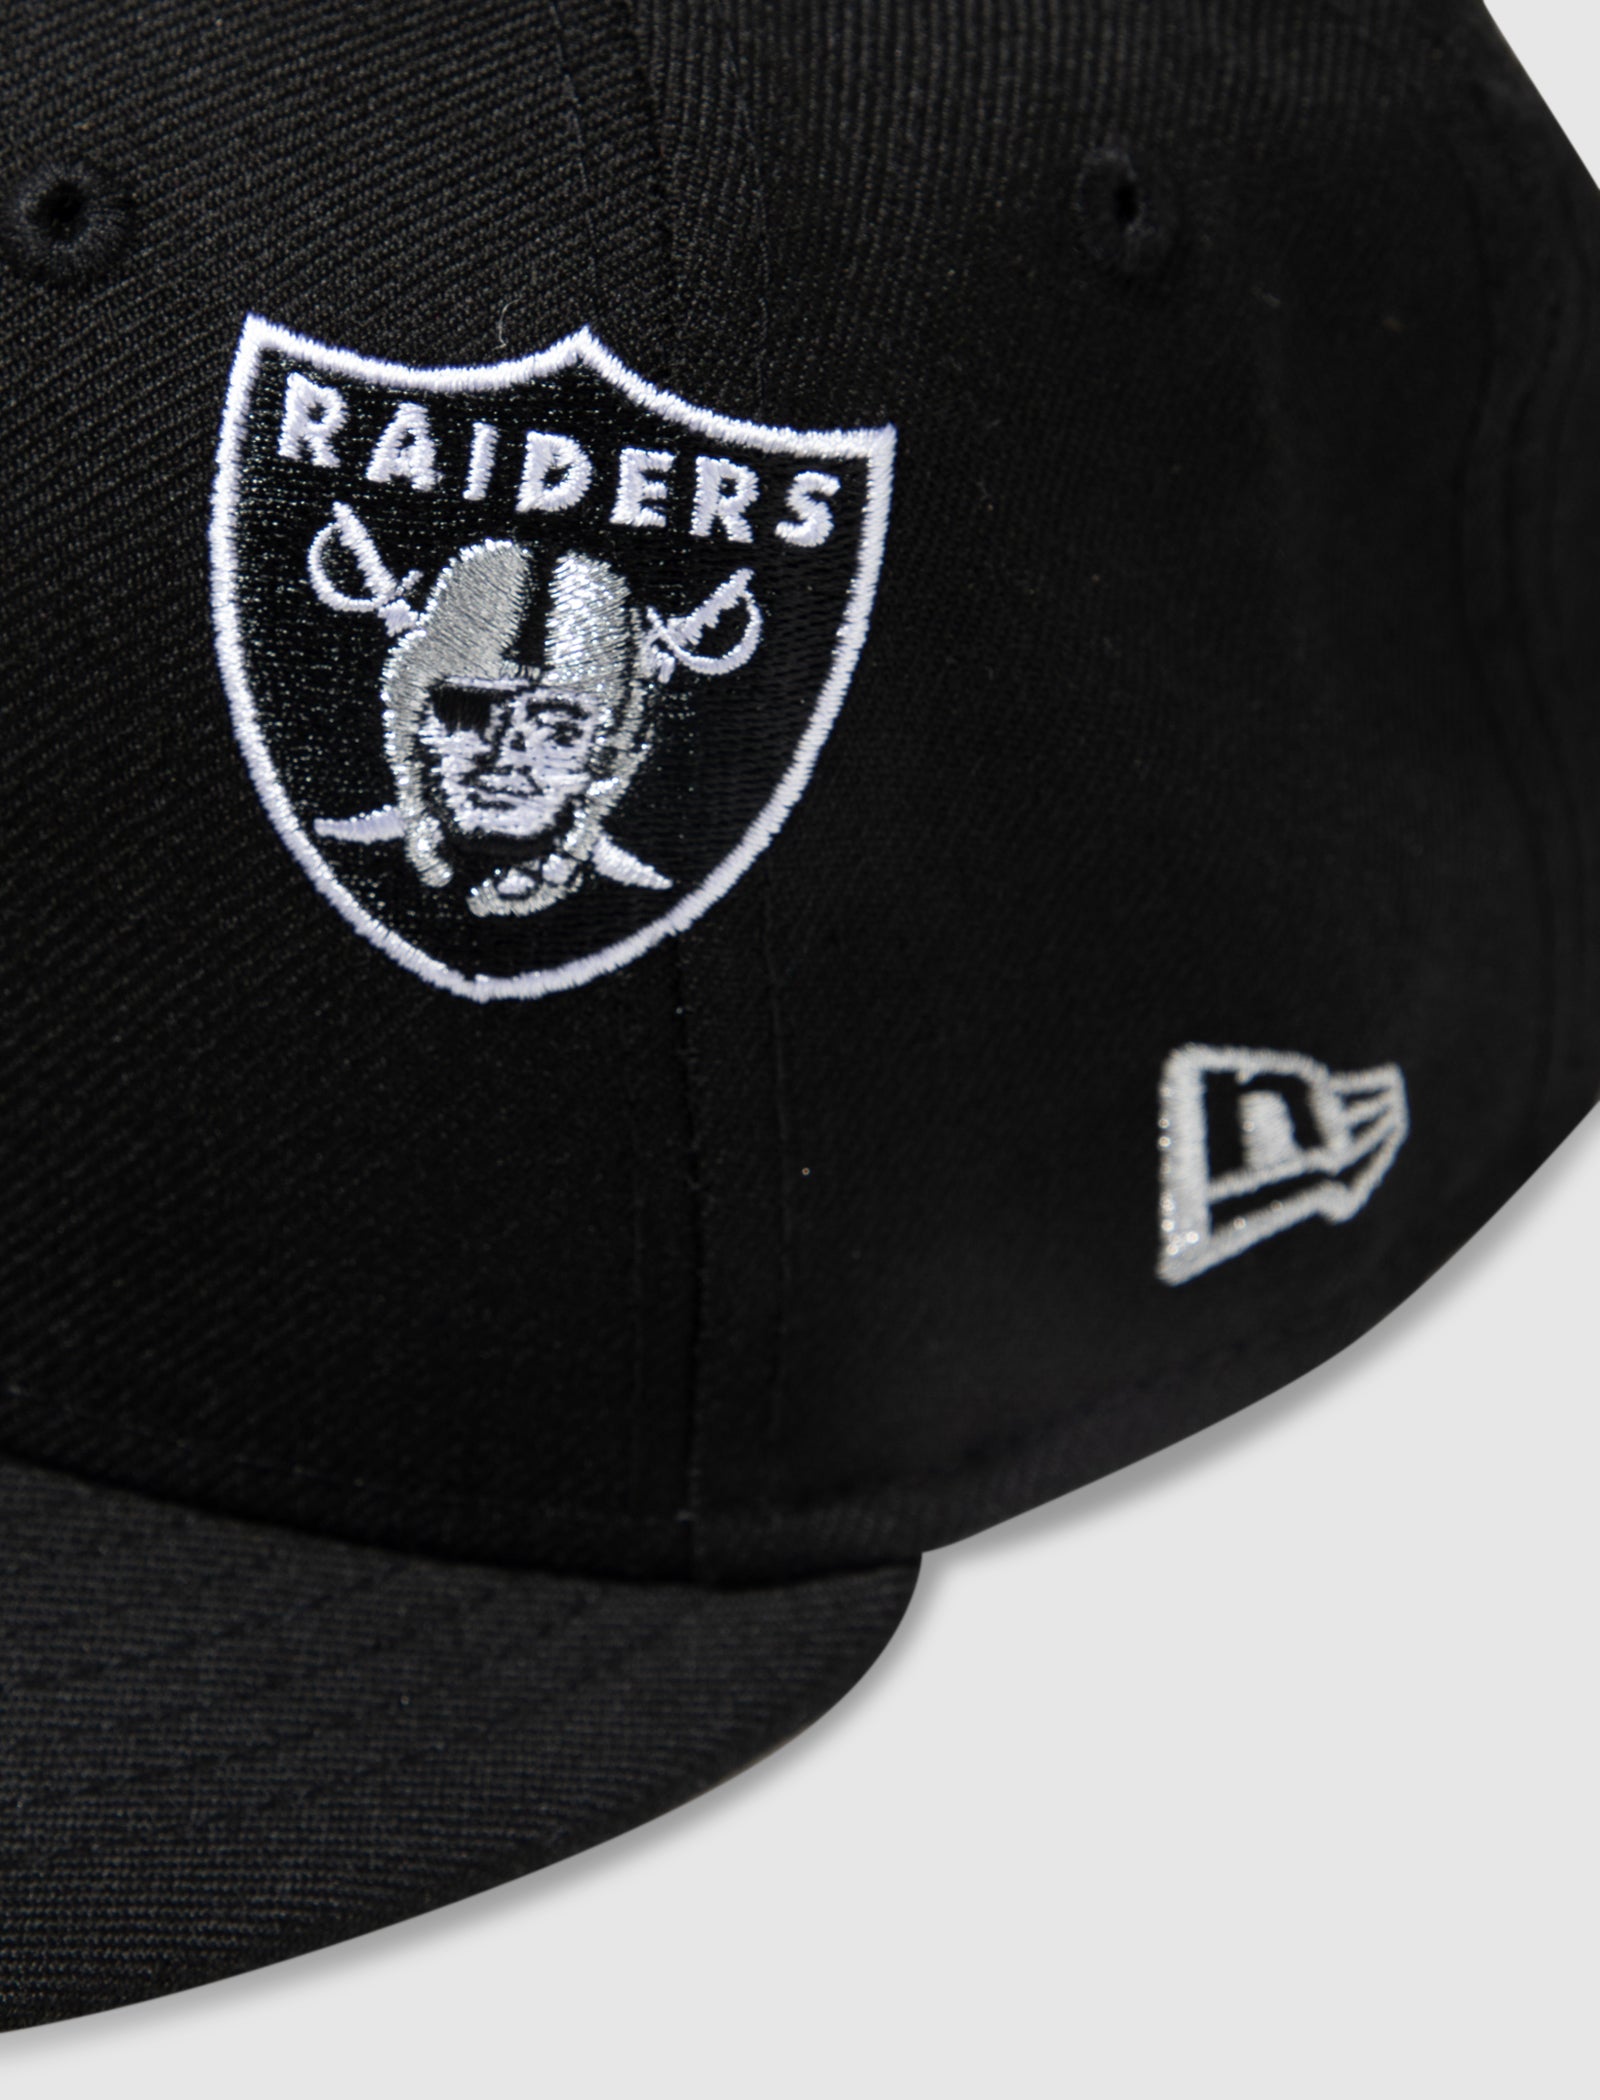 all black raiders hat